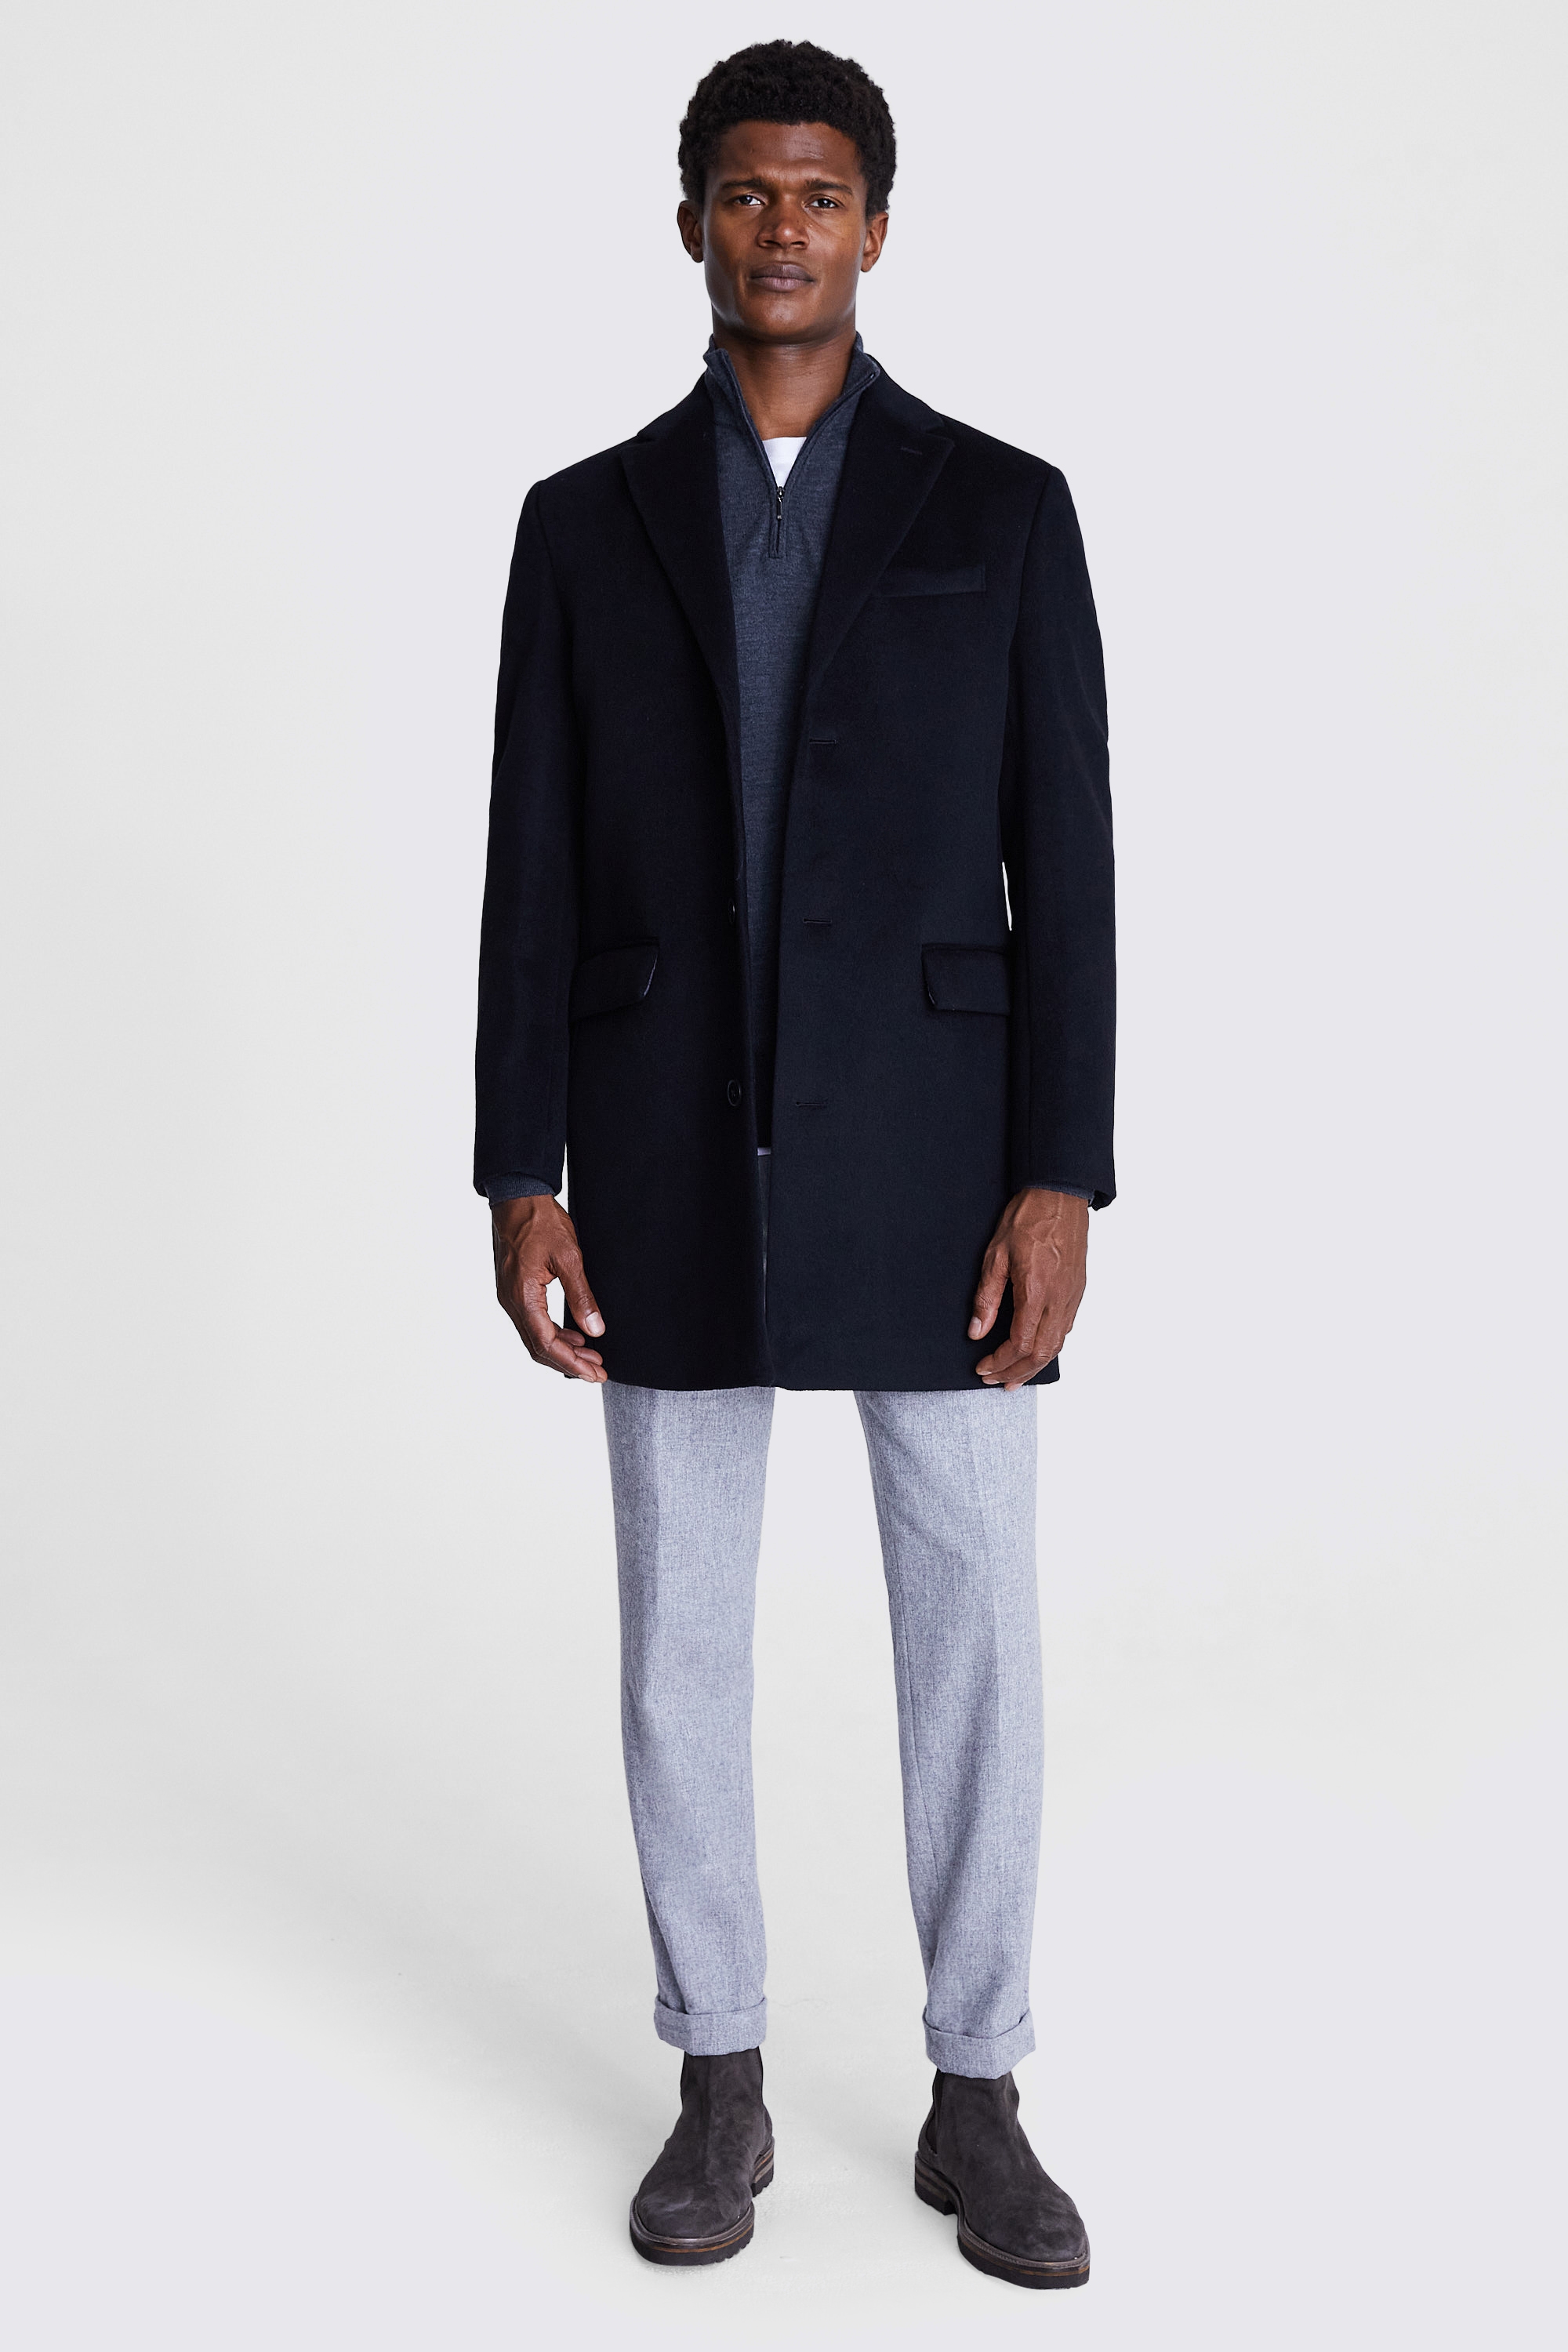 Black Wool Blend Overcoat | Buy Online at Moss